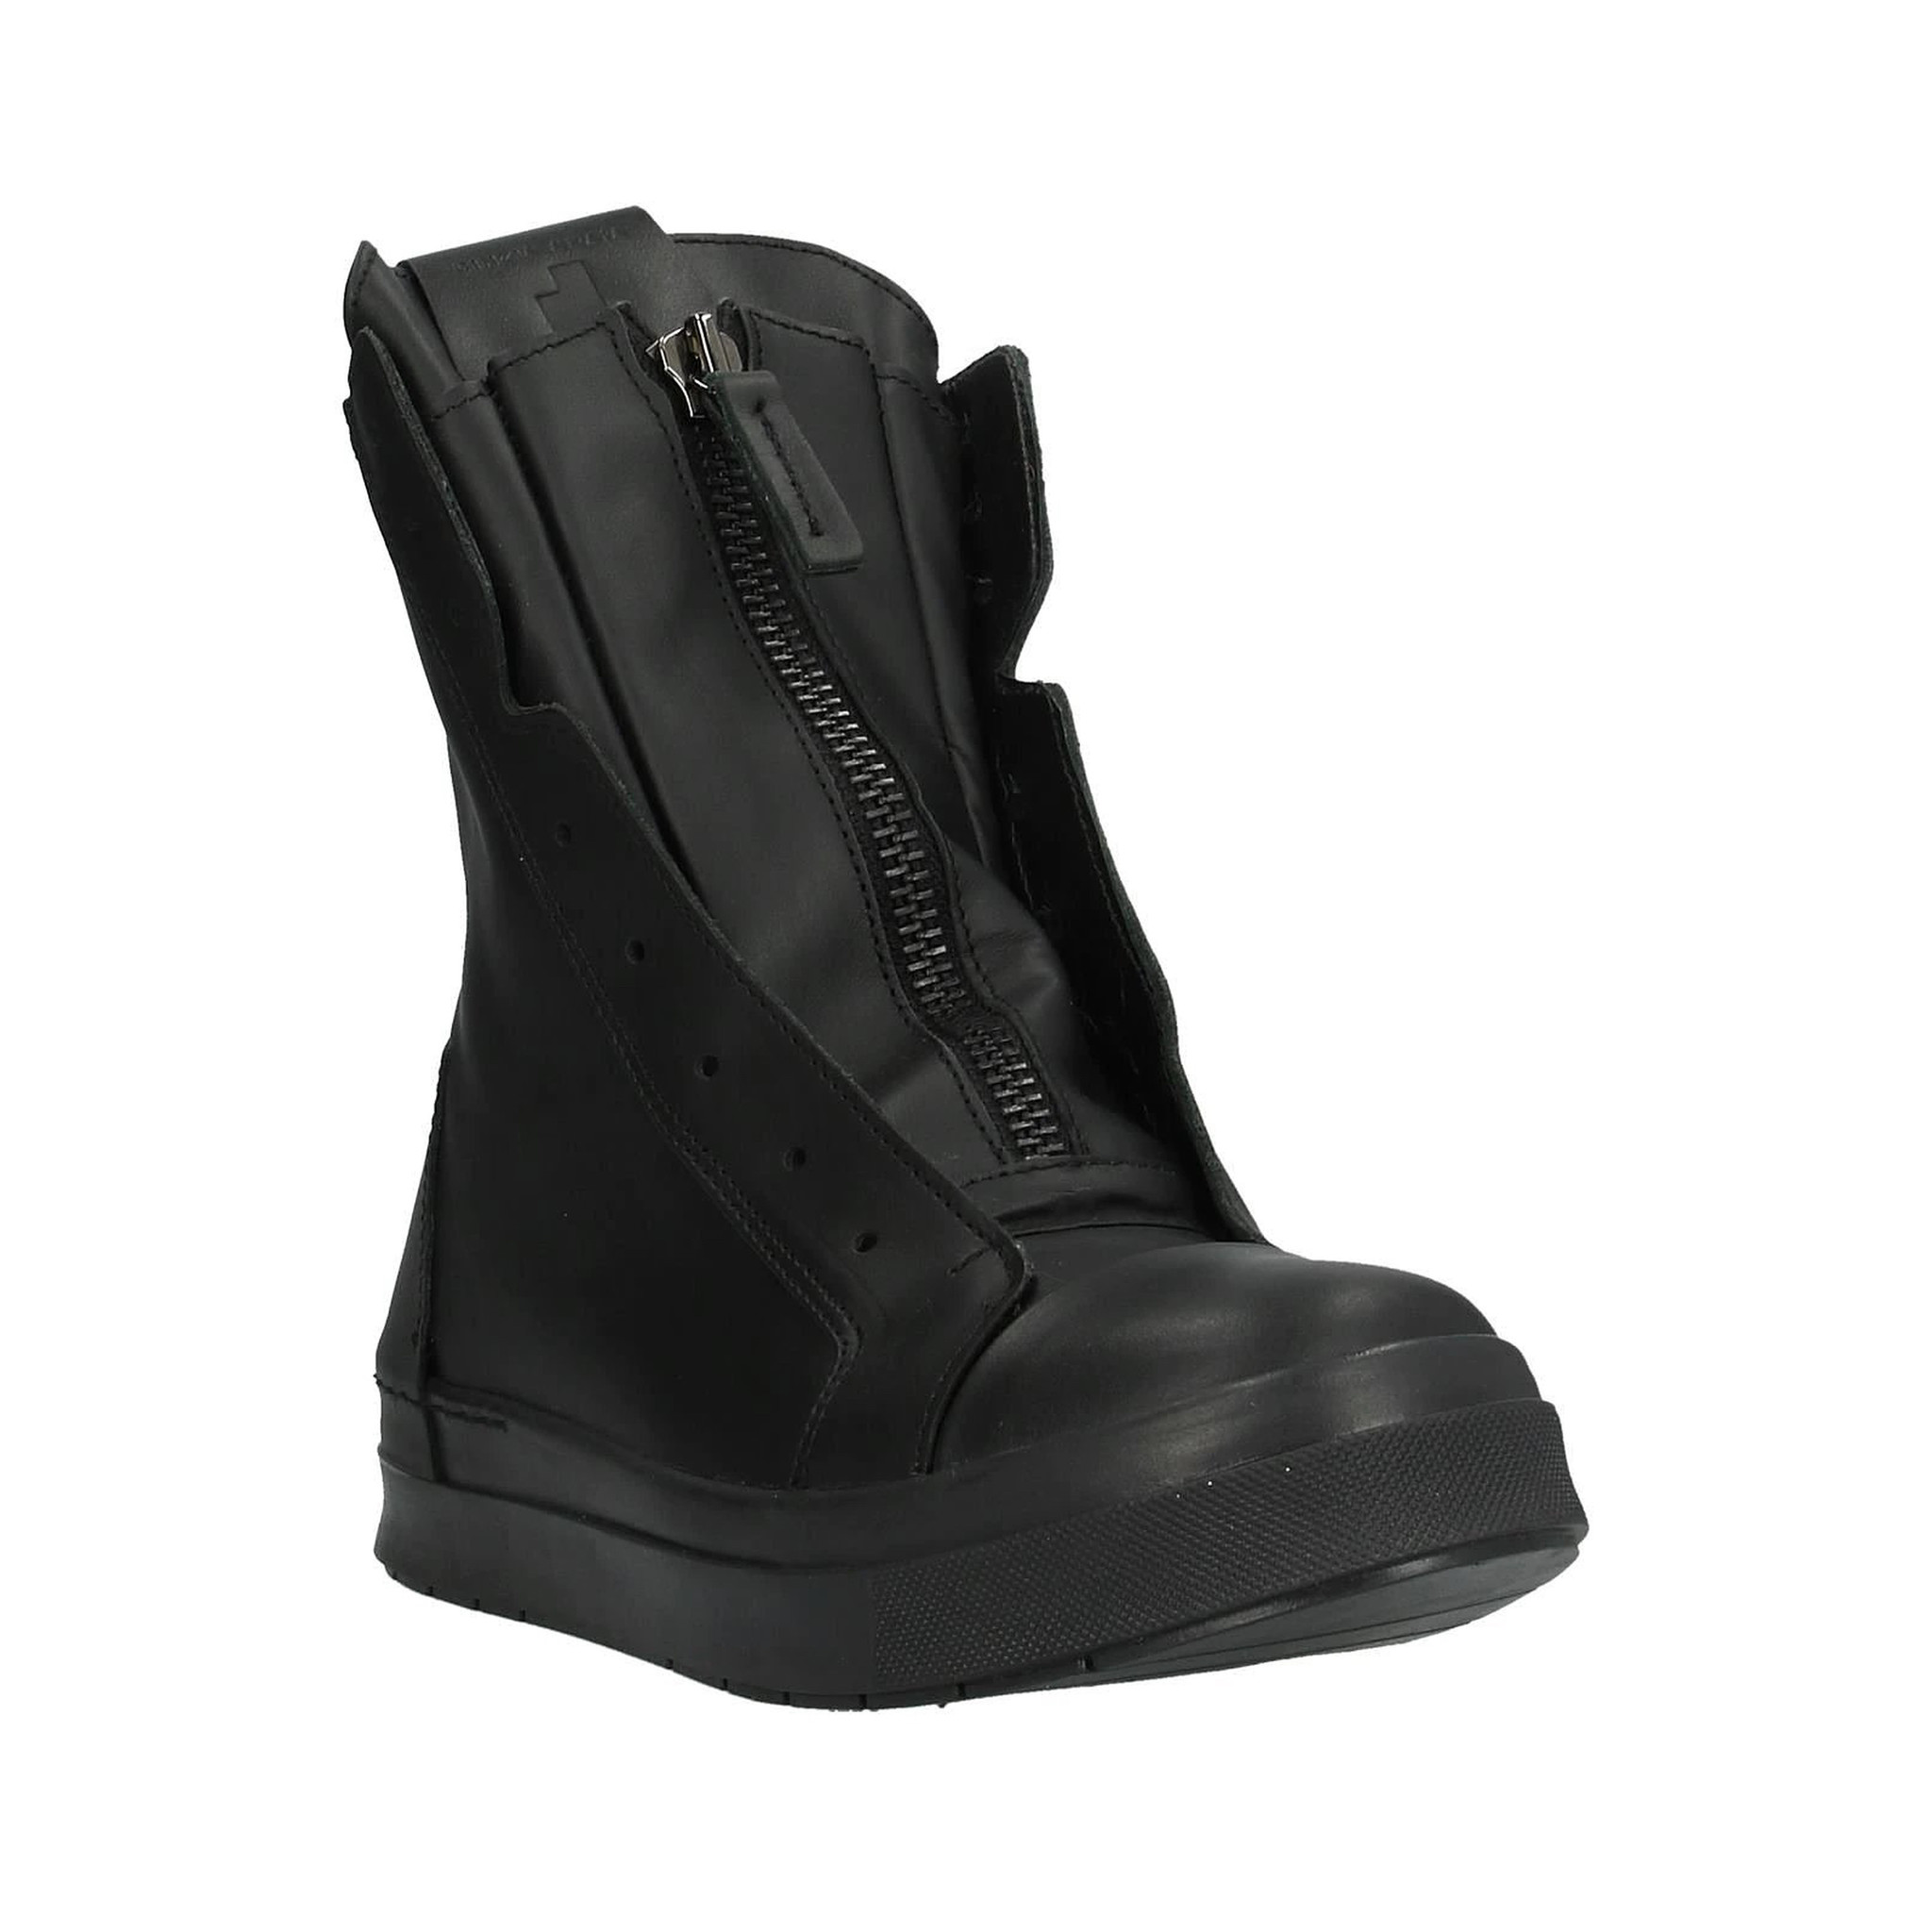 Cinzia Araia-Women’s Soft Leather High Top Sneaker Boots